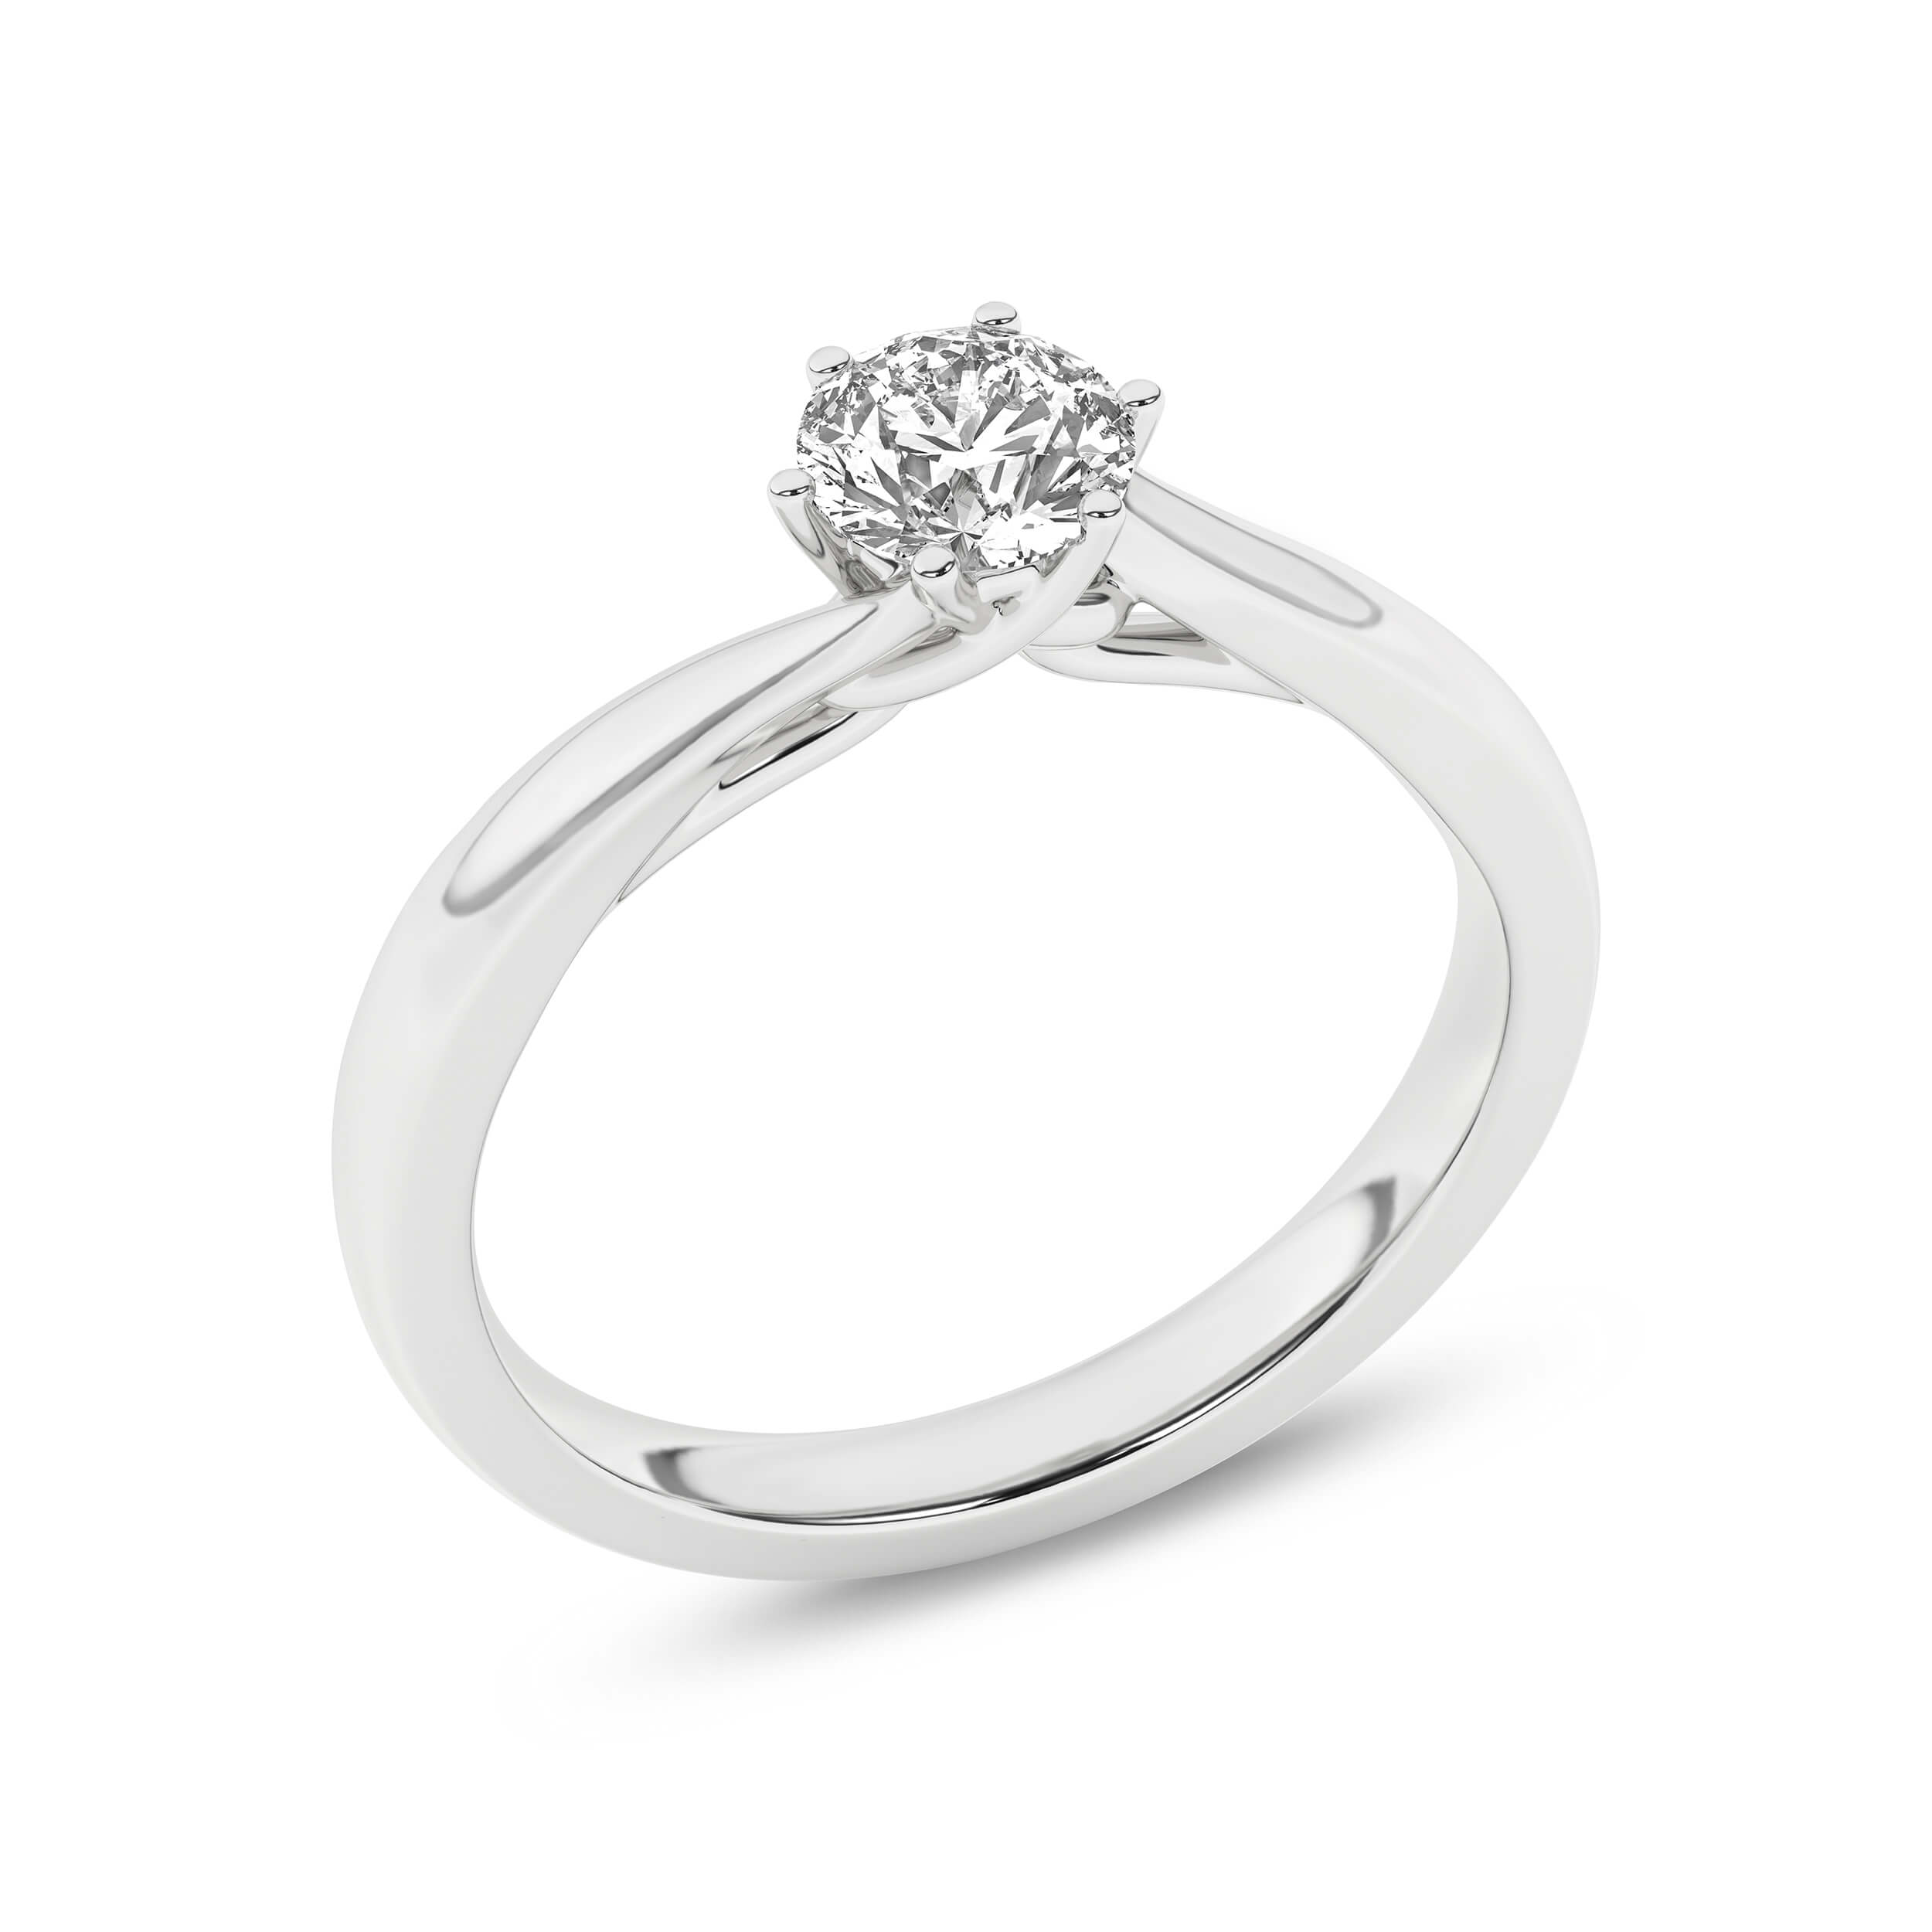 Inel de logodna din Aur Alb 18K cu Diamant 0.5Ct, articol RS0471, previzualizare foto 4